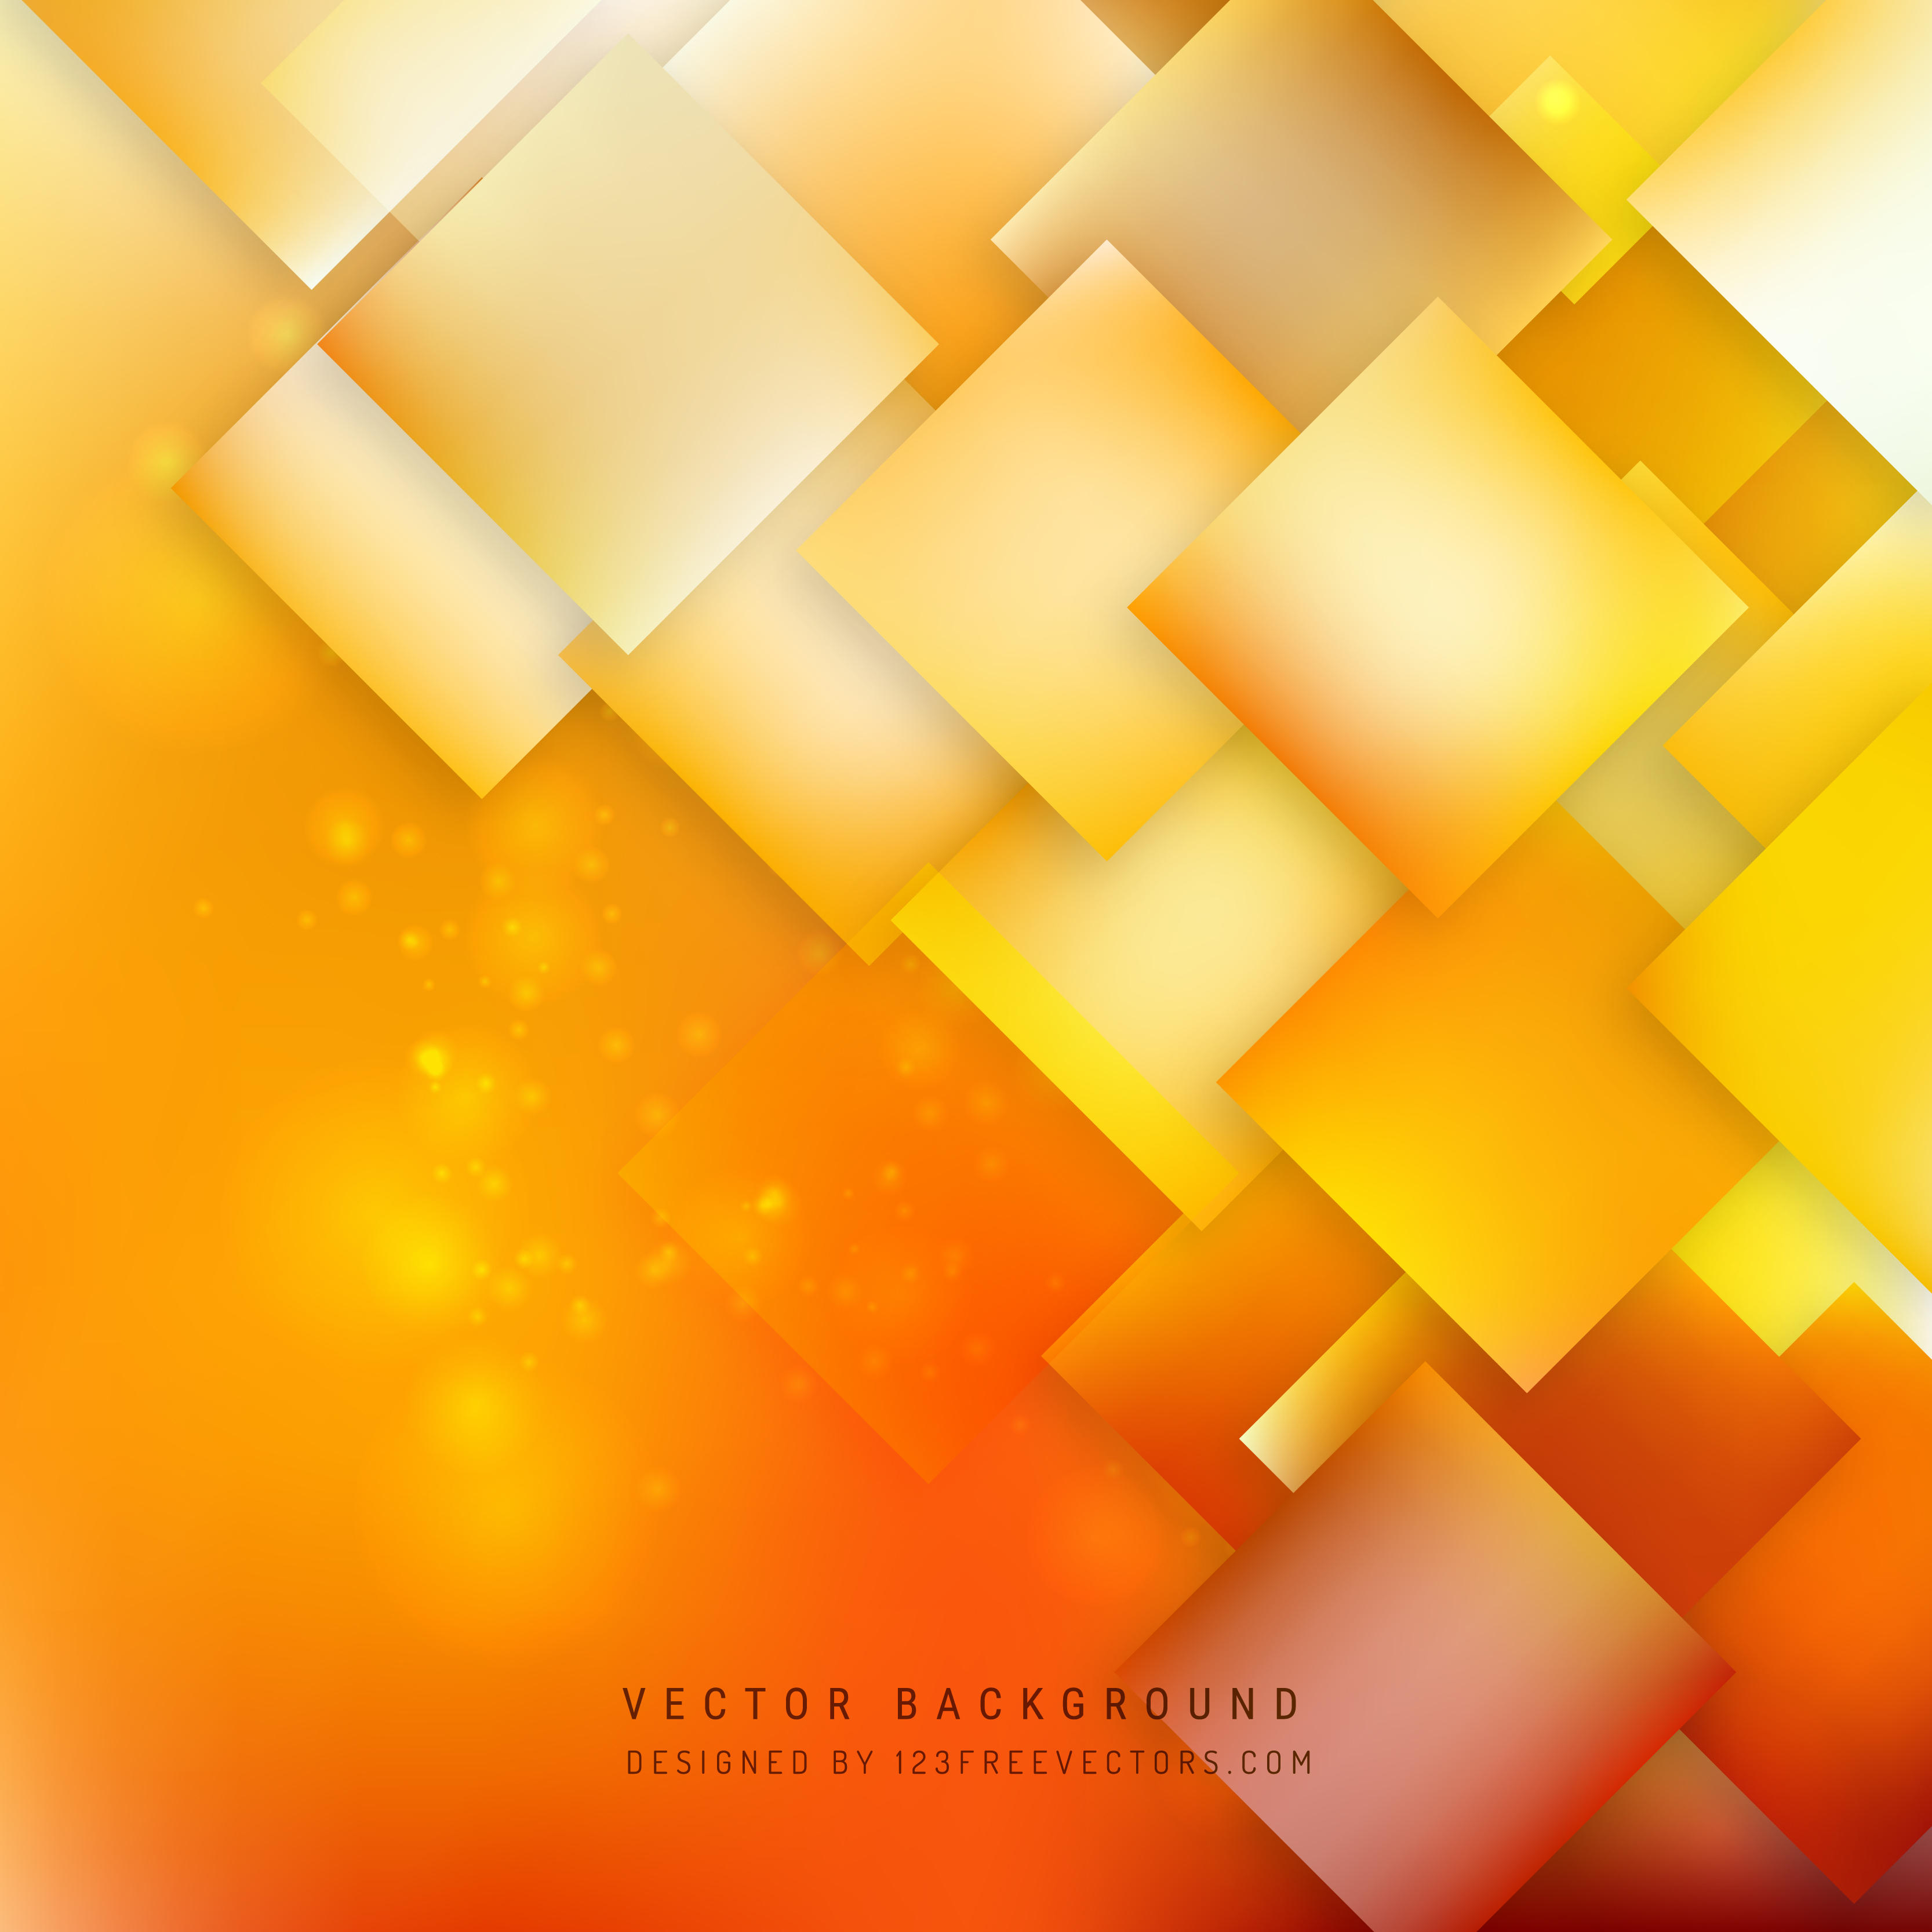 Abstract Yellow Orange Geometric Polygon Background | 123Freevectors